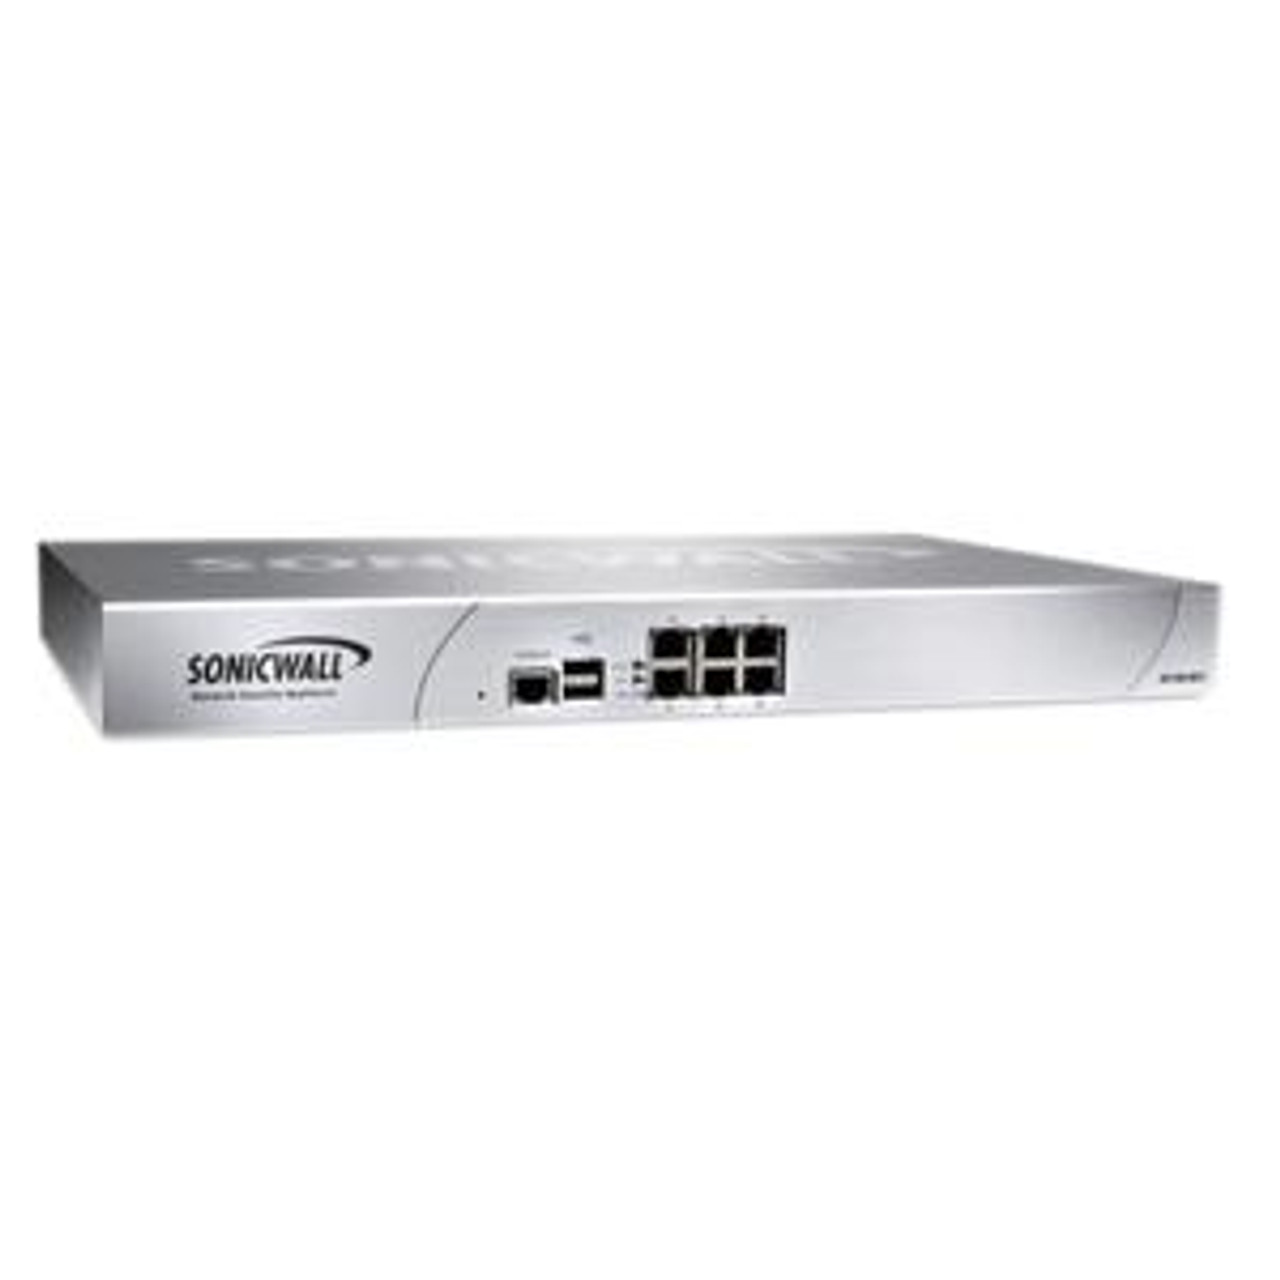 01-SSC-8673 SonicWALL NSA 2400 Secure Plus 3 6 Port Gigabit Ethernet (Refurbished)